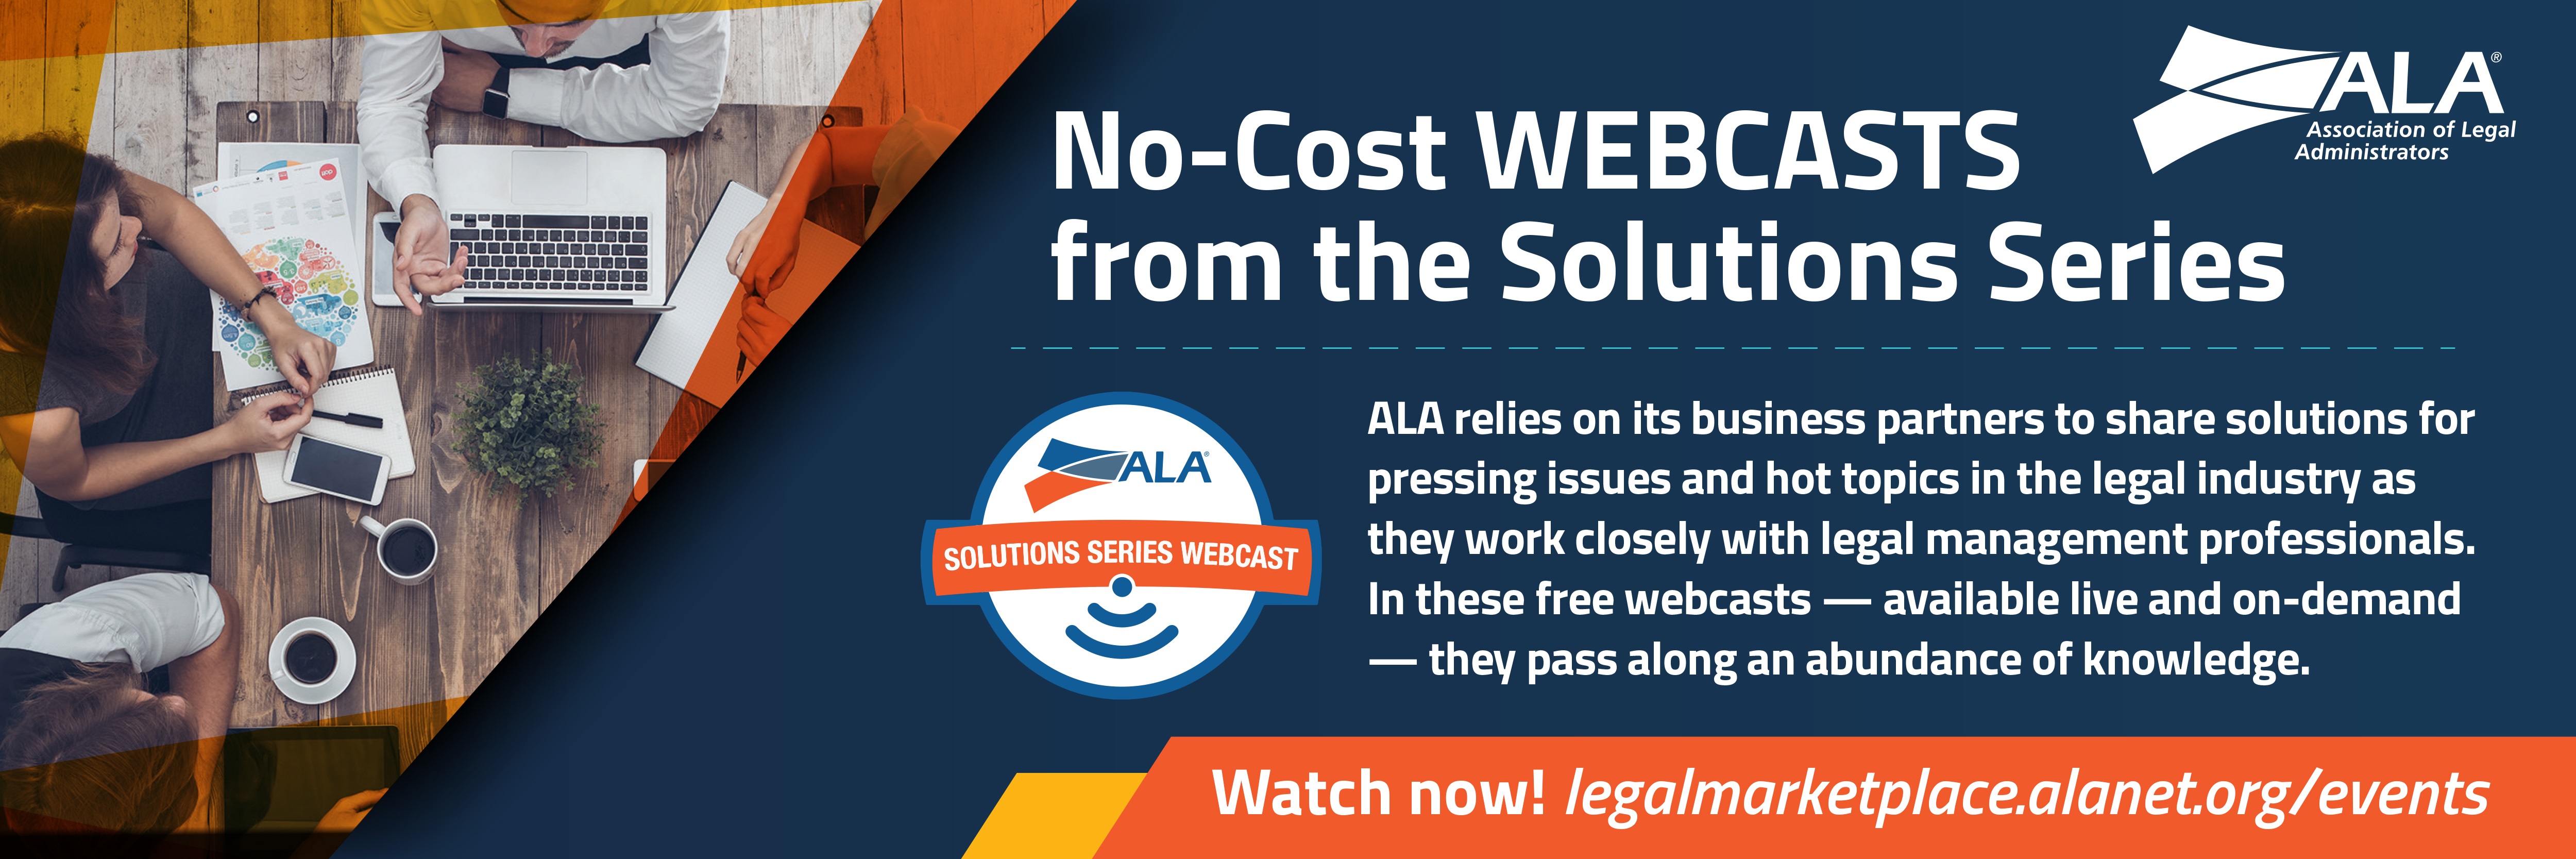 ALA Solutions Series Webcast